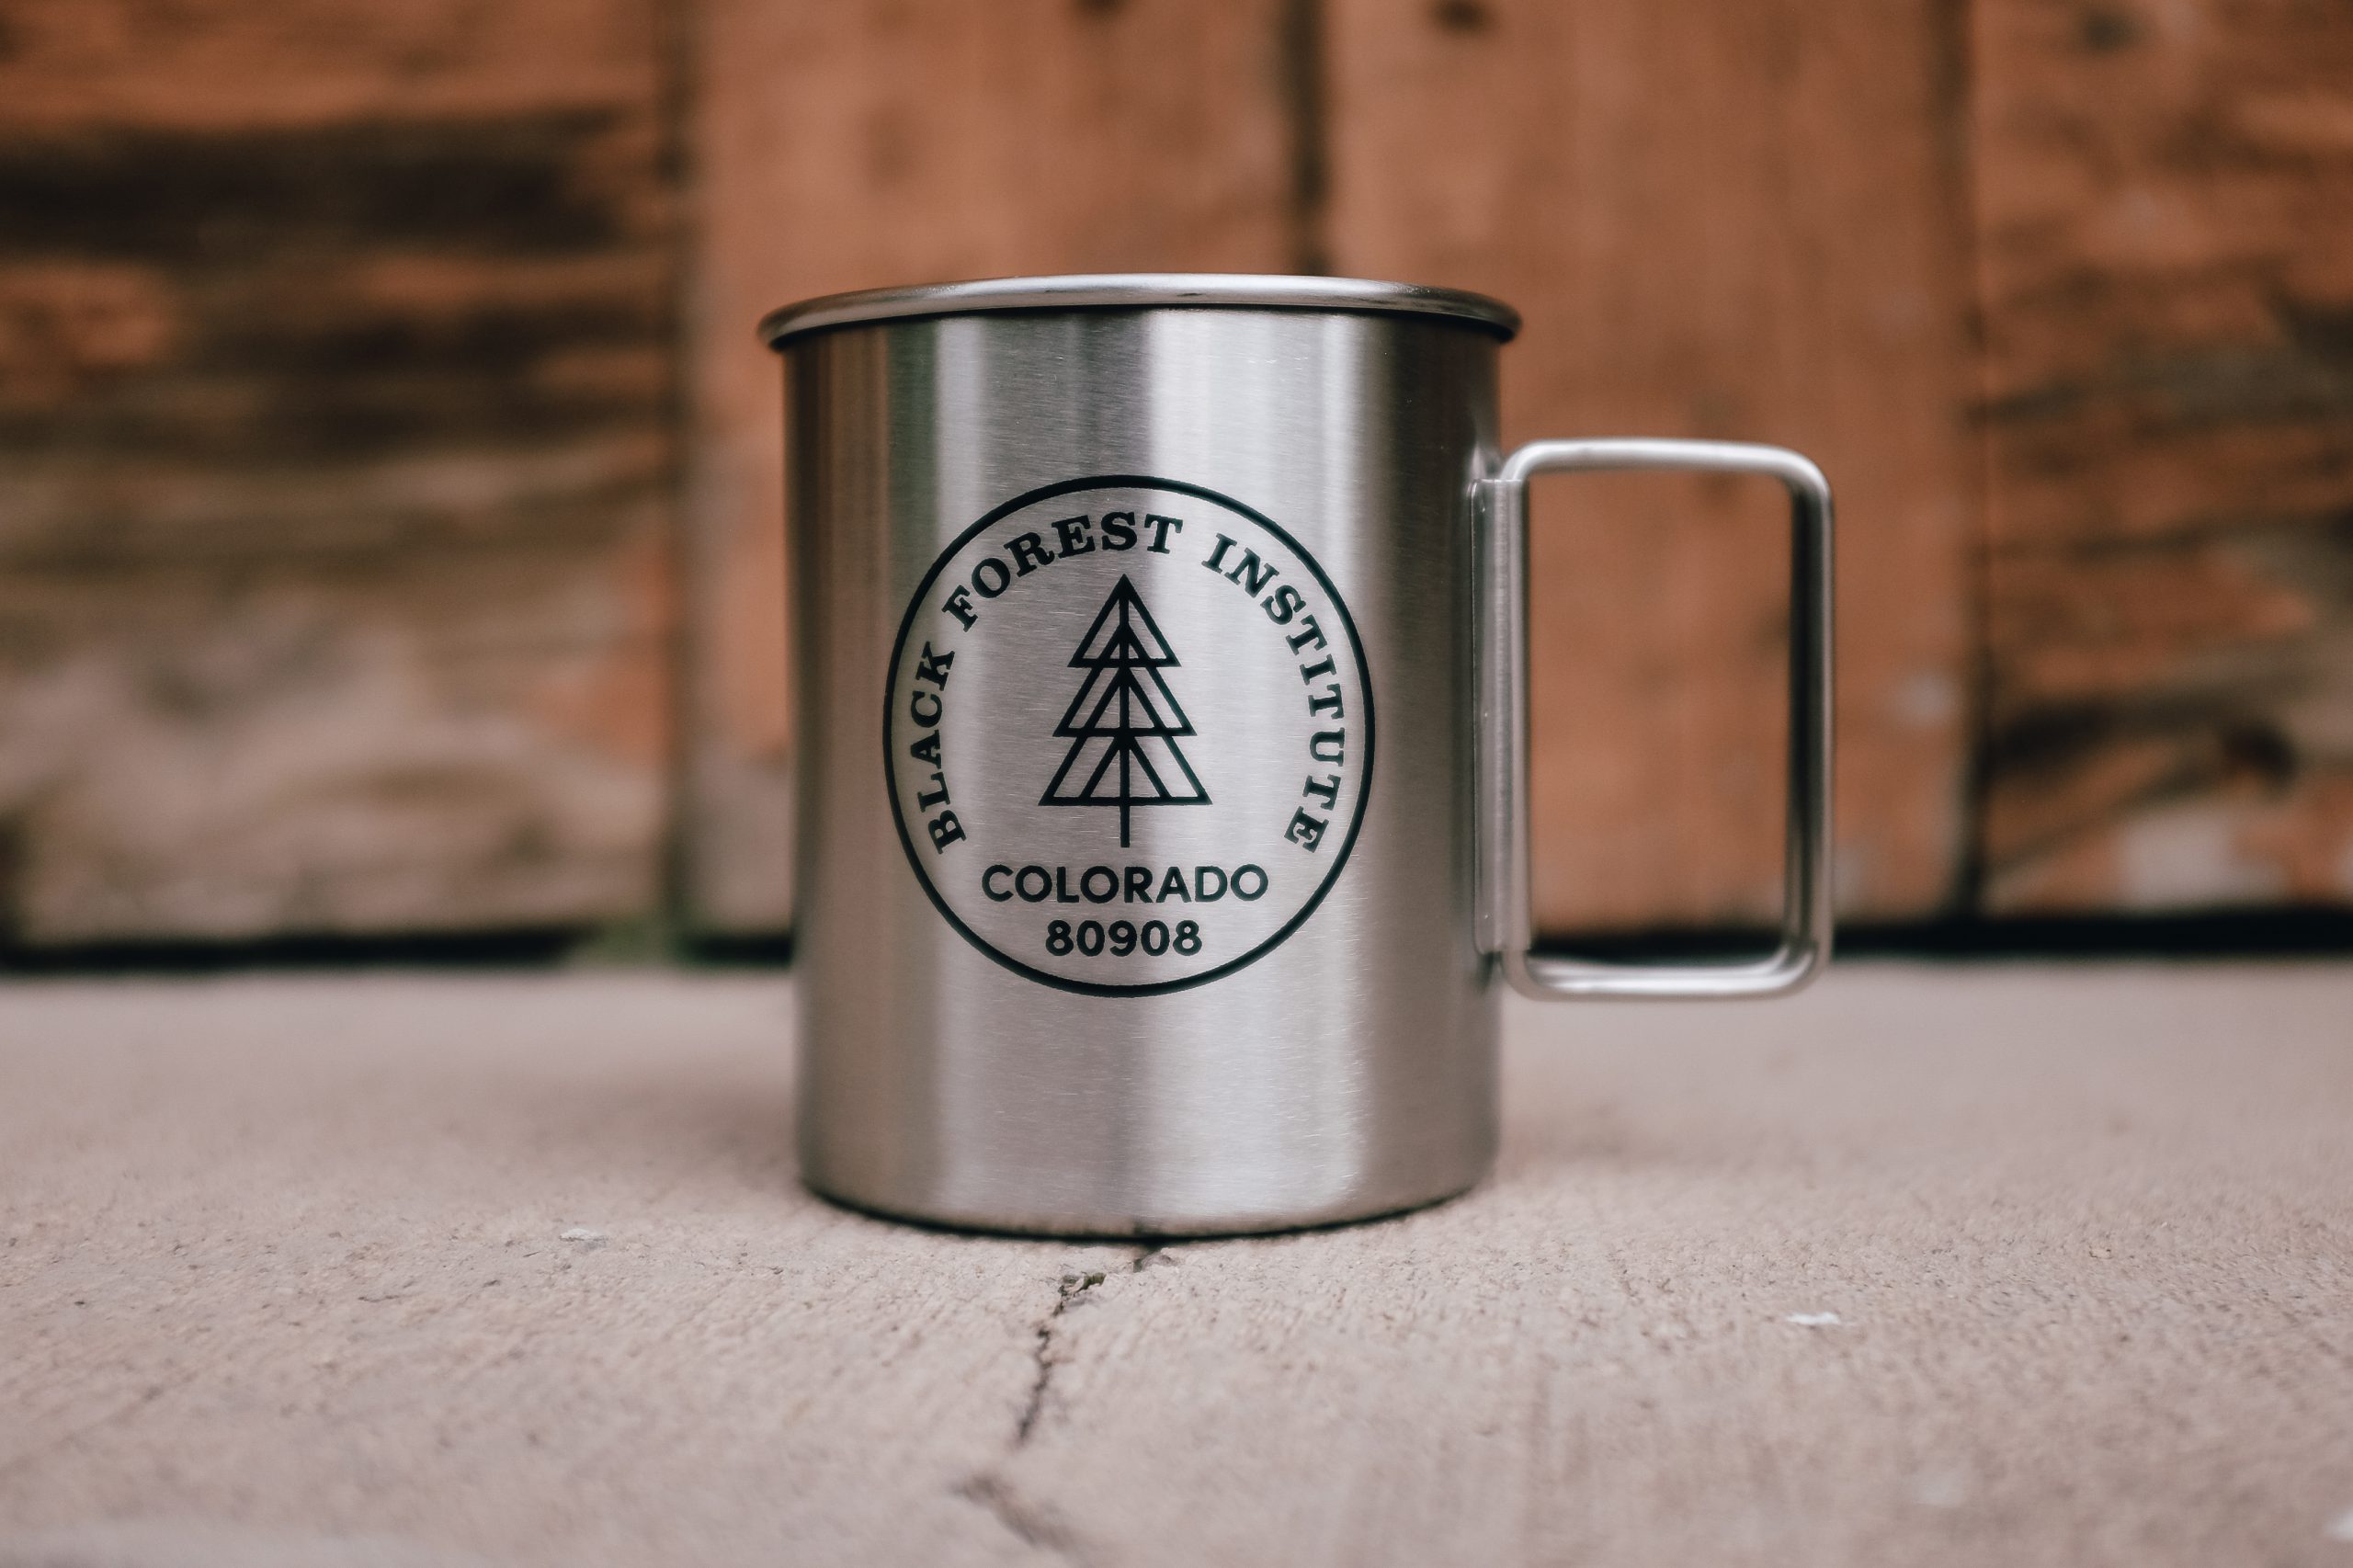 Old School Campfire Mug – Engel Coolers